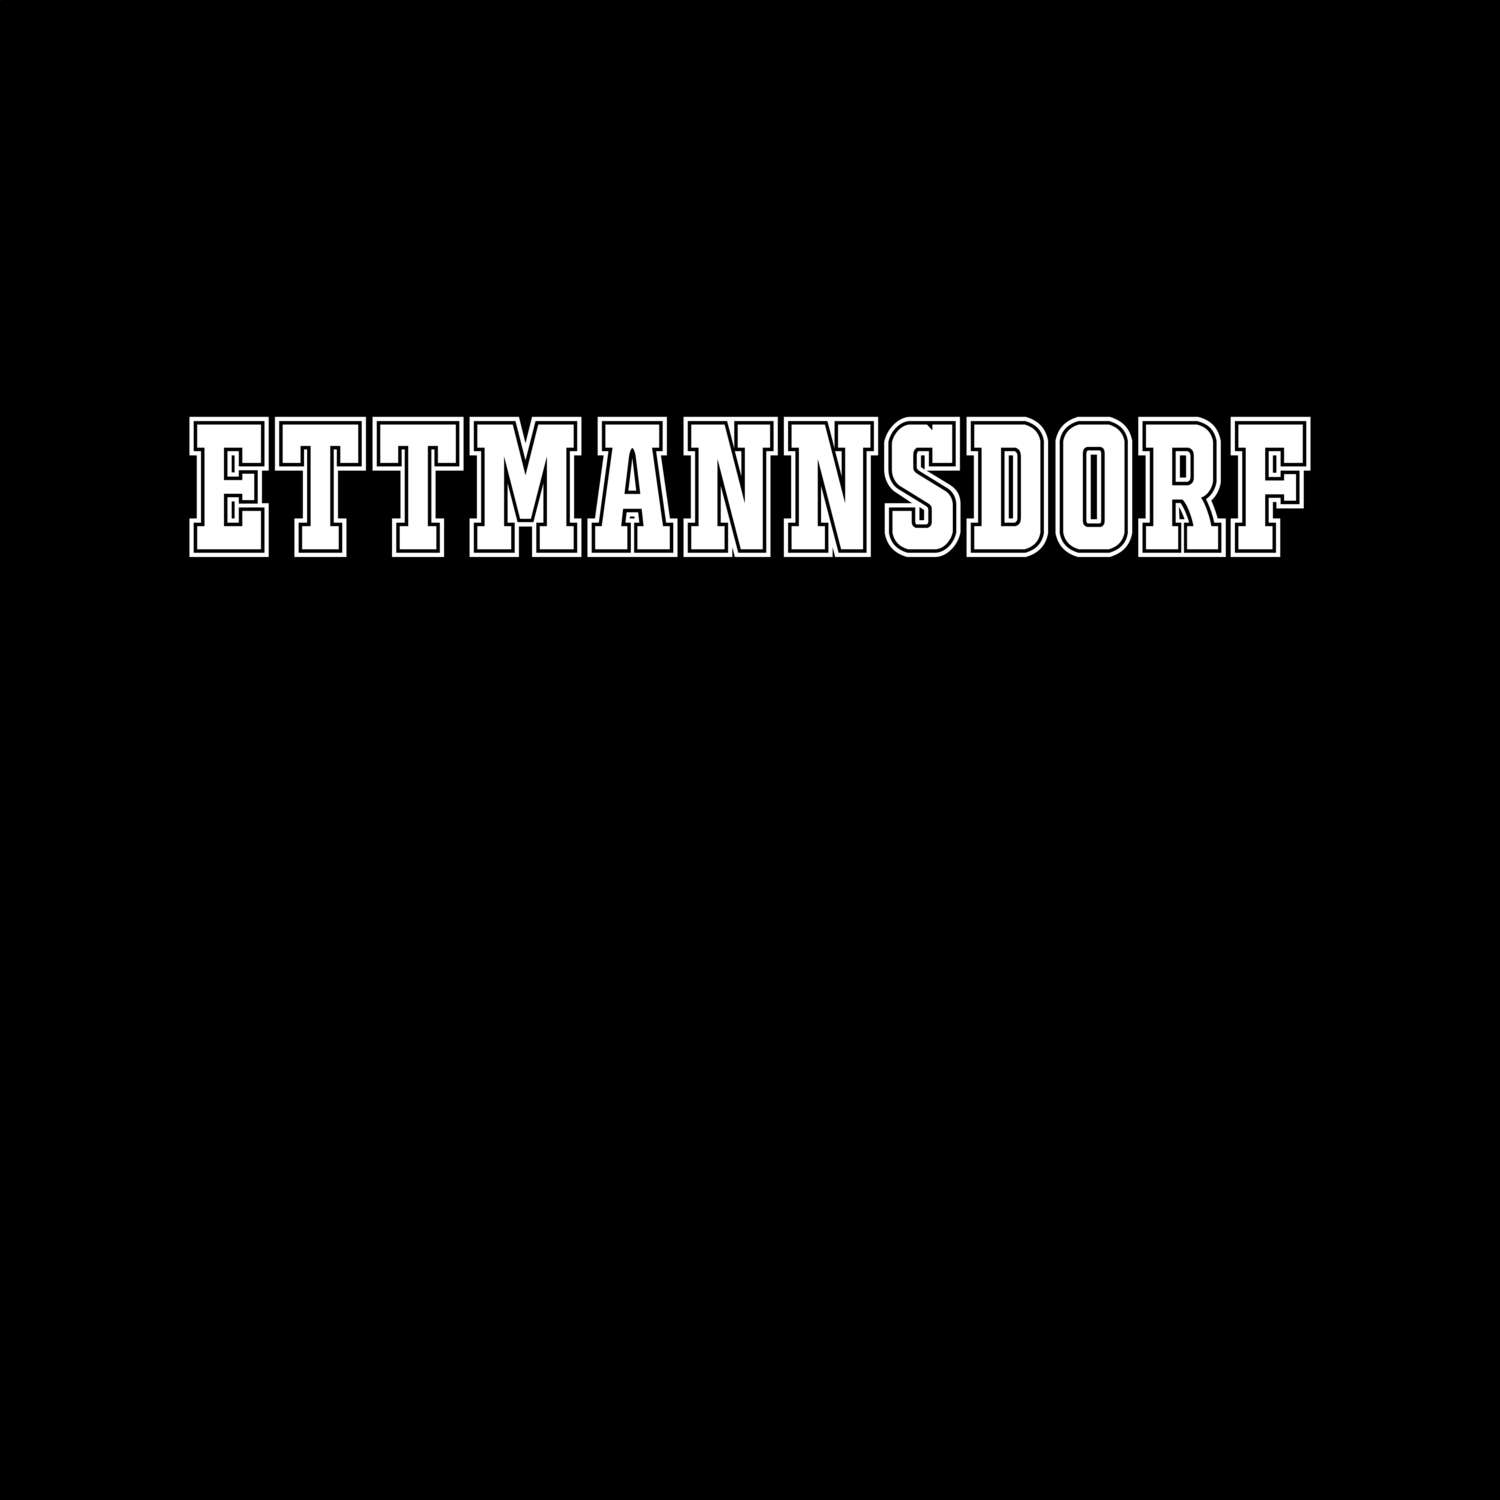 Ettmannsdorf T-Shirt »Classic«